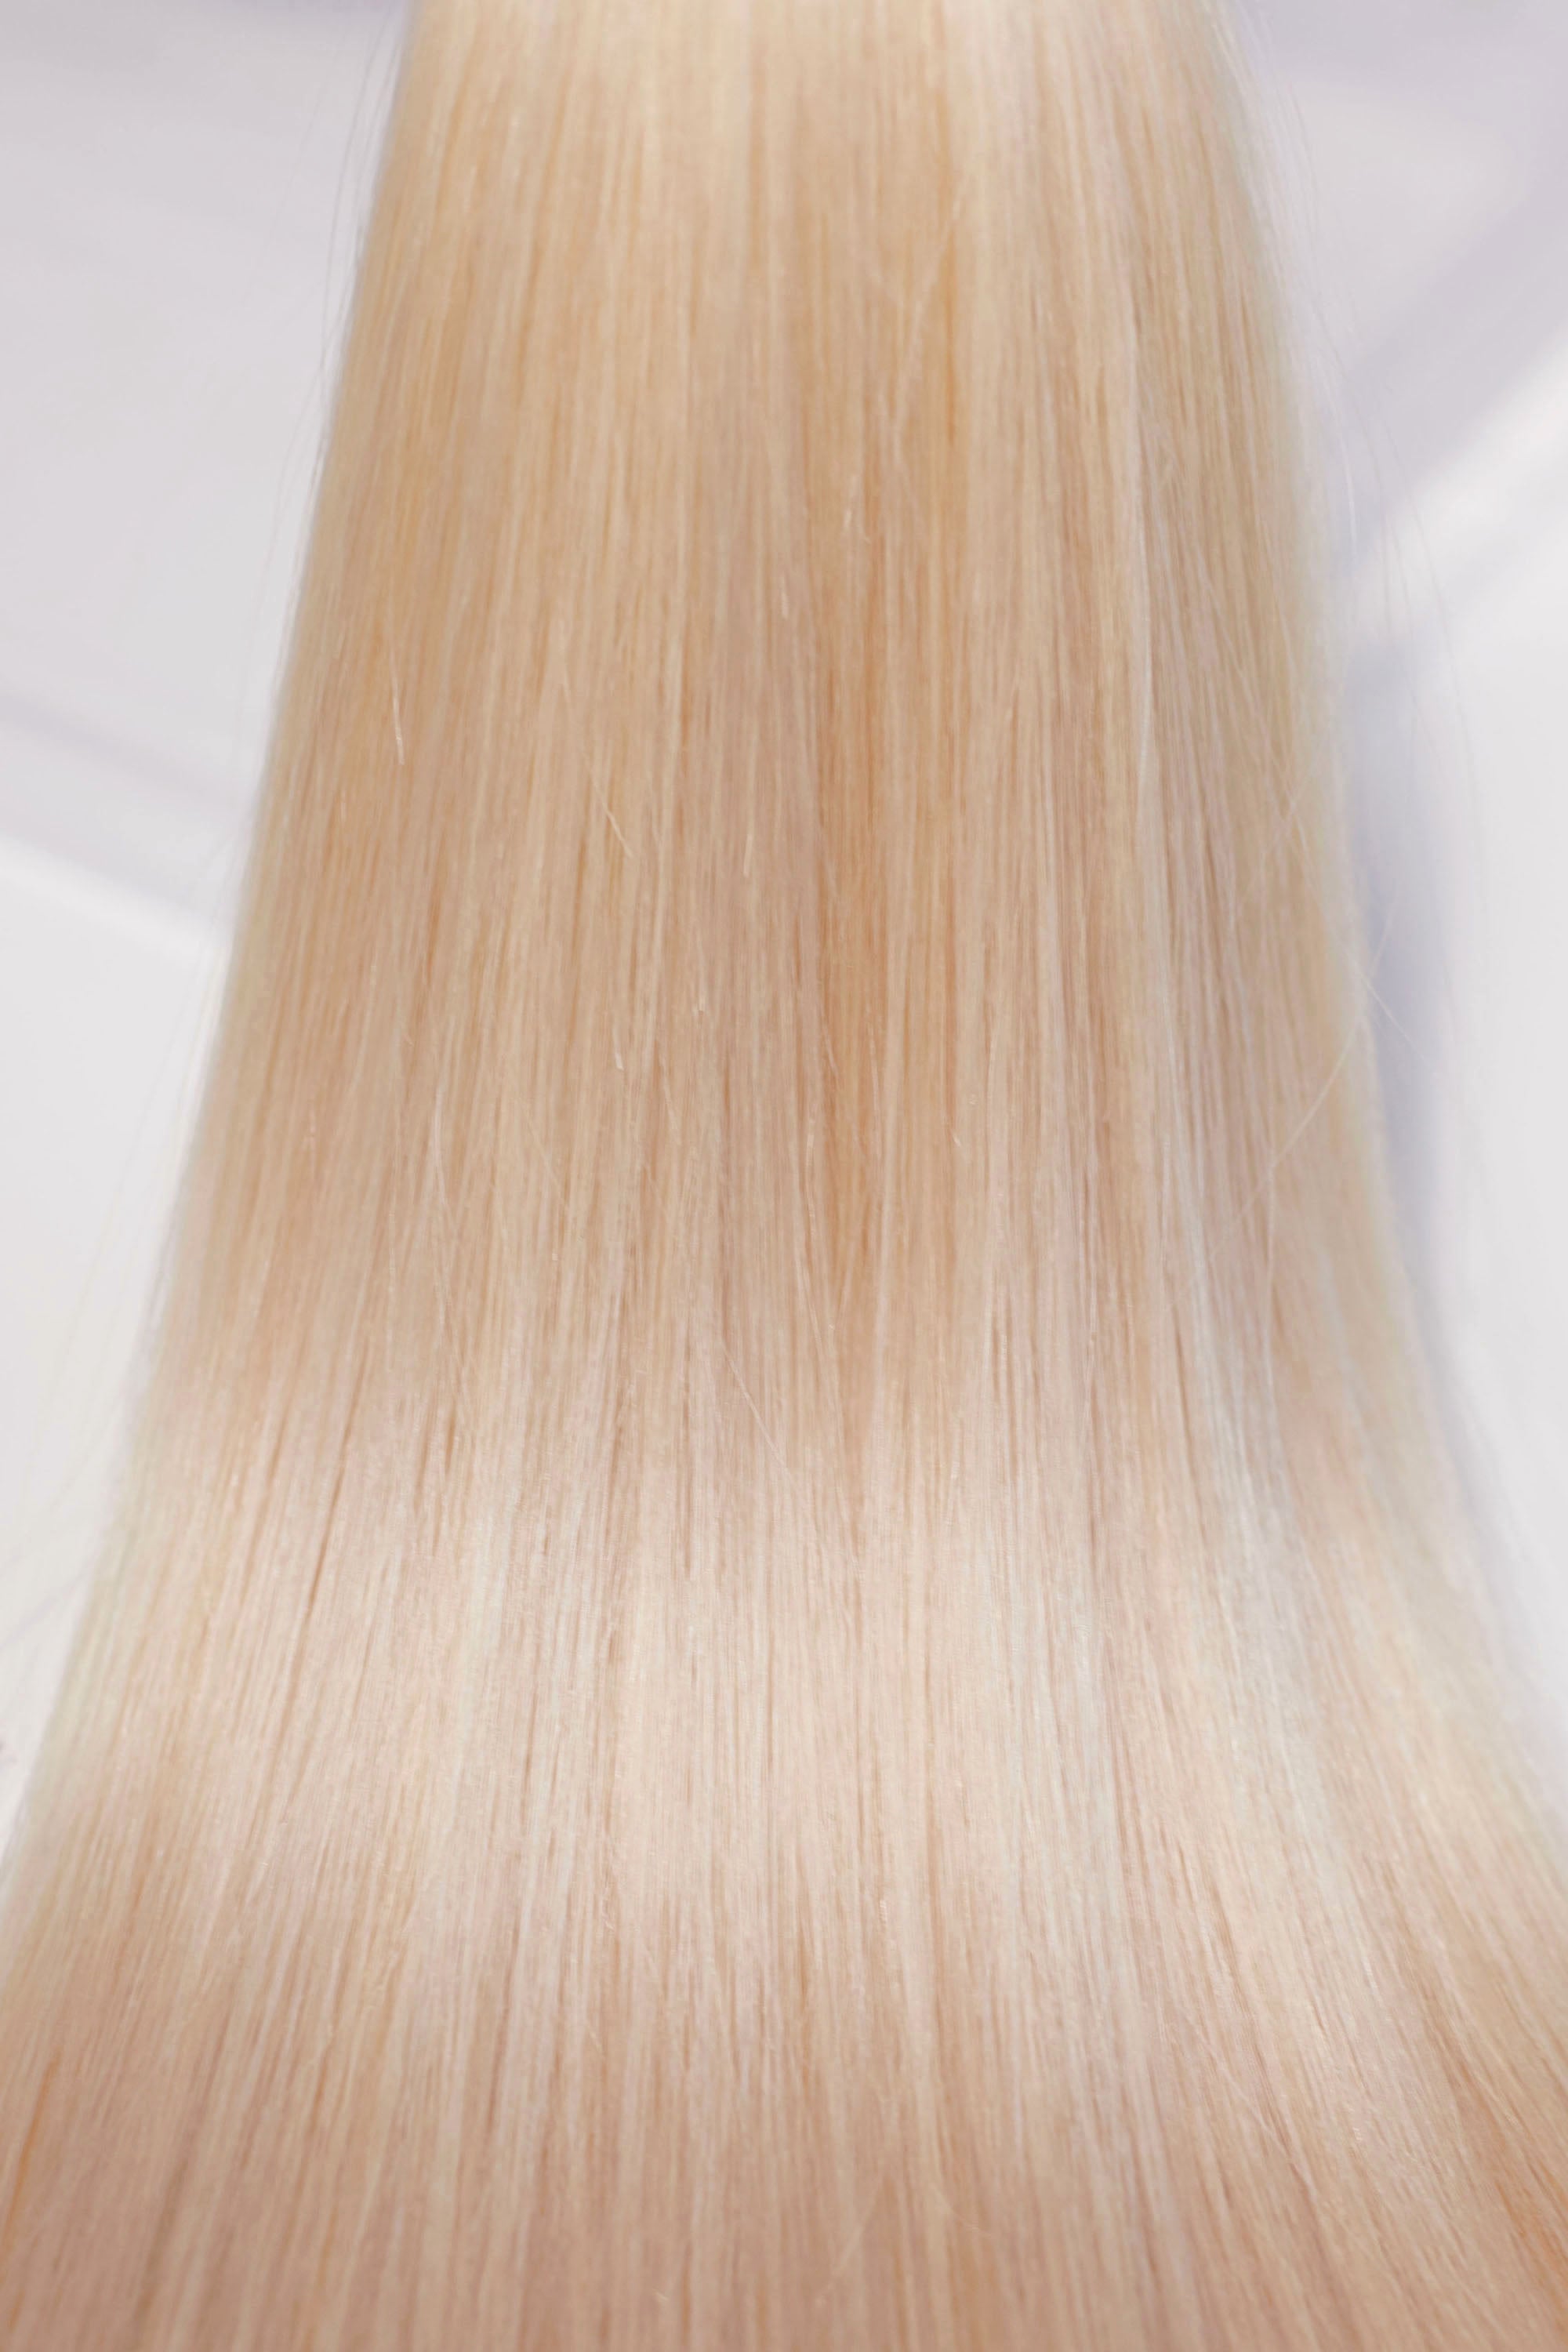 Behair professional Bulk hair "Premium" 22" (55cm) Natural Straight Platinum Blond #60 - 25g hair extensions